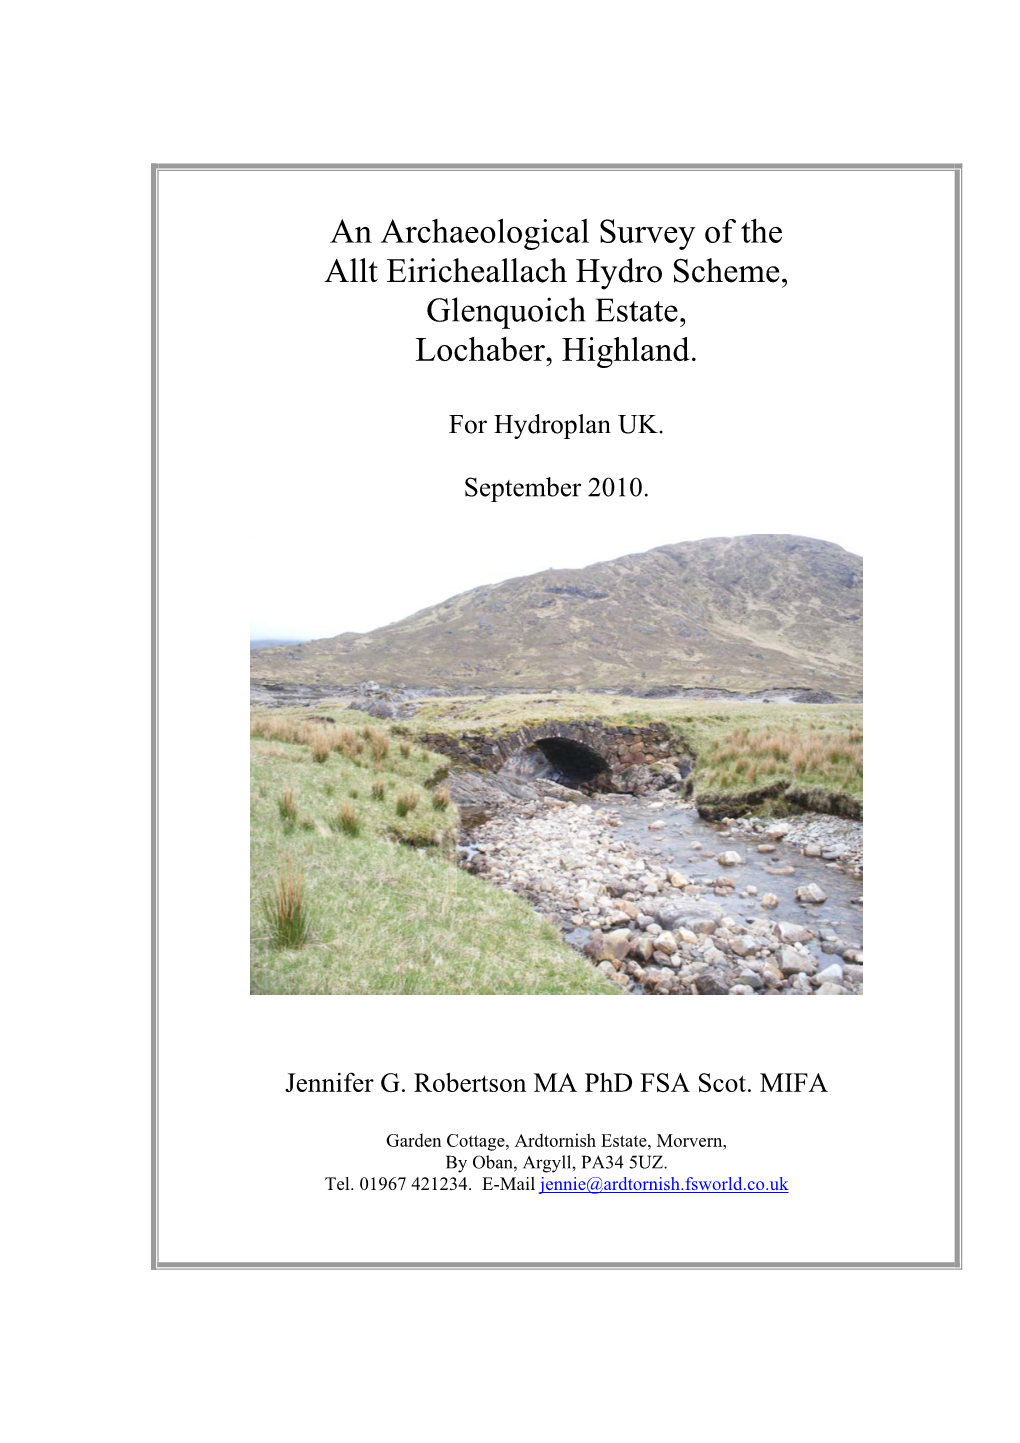 An Archaeological Survey of the Allt Eiricheallach Hydro Scheme, Glenquoich Estate, Lochaber, Highland